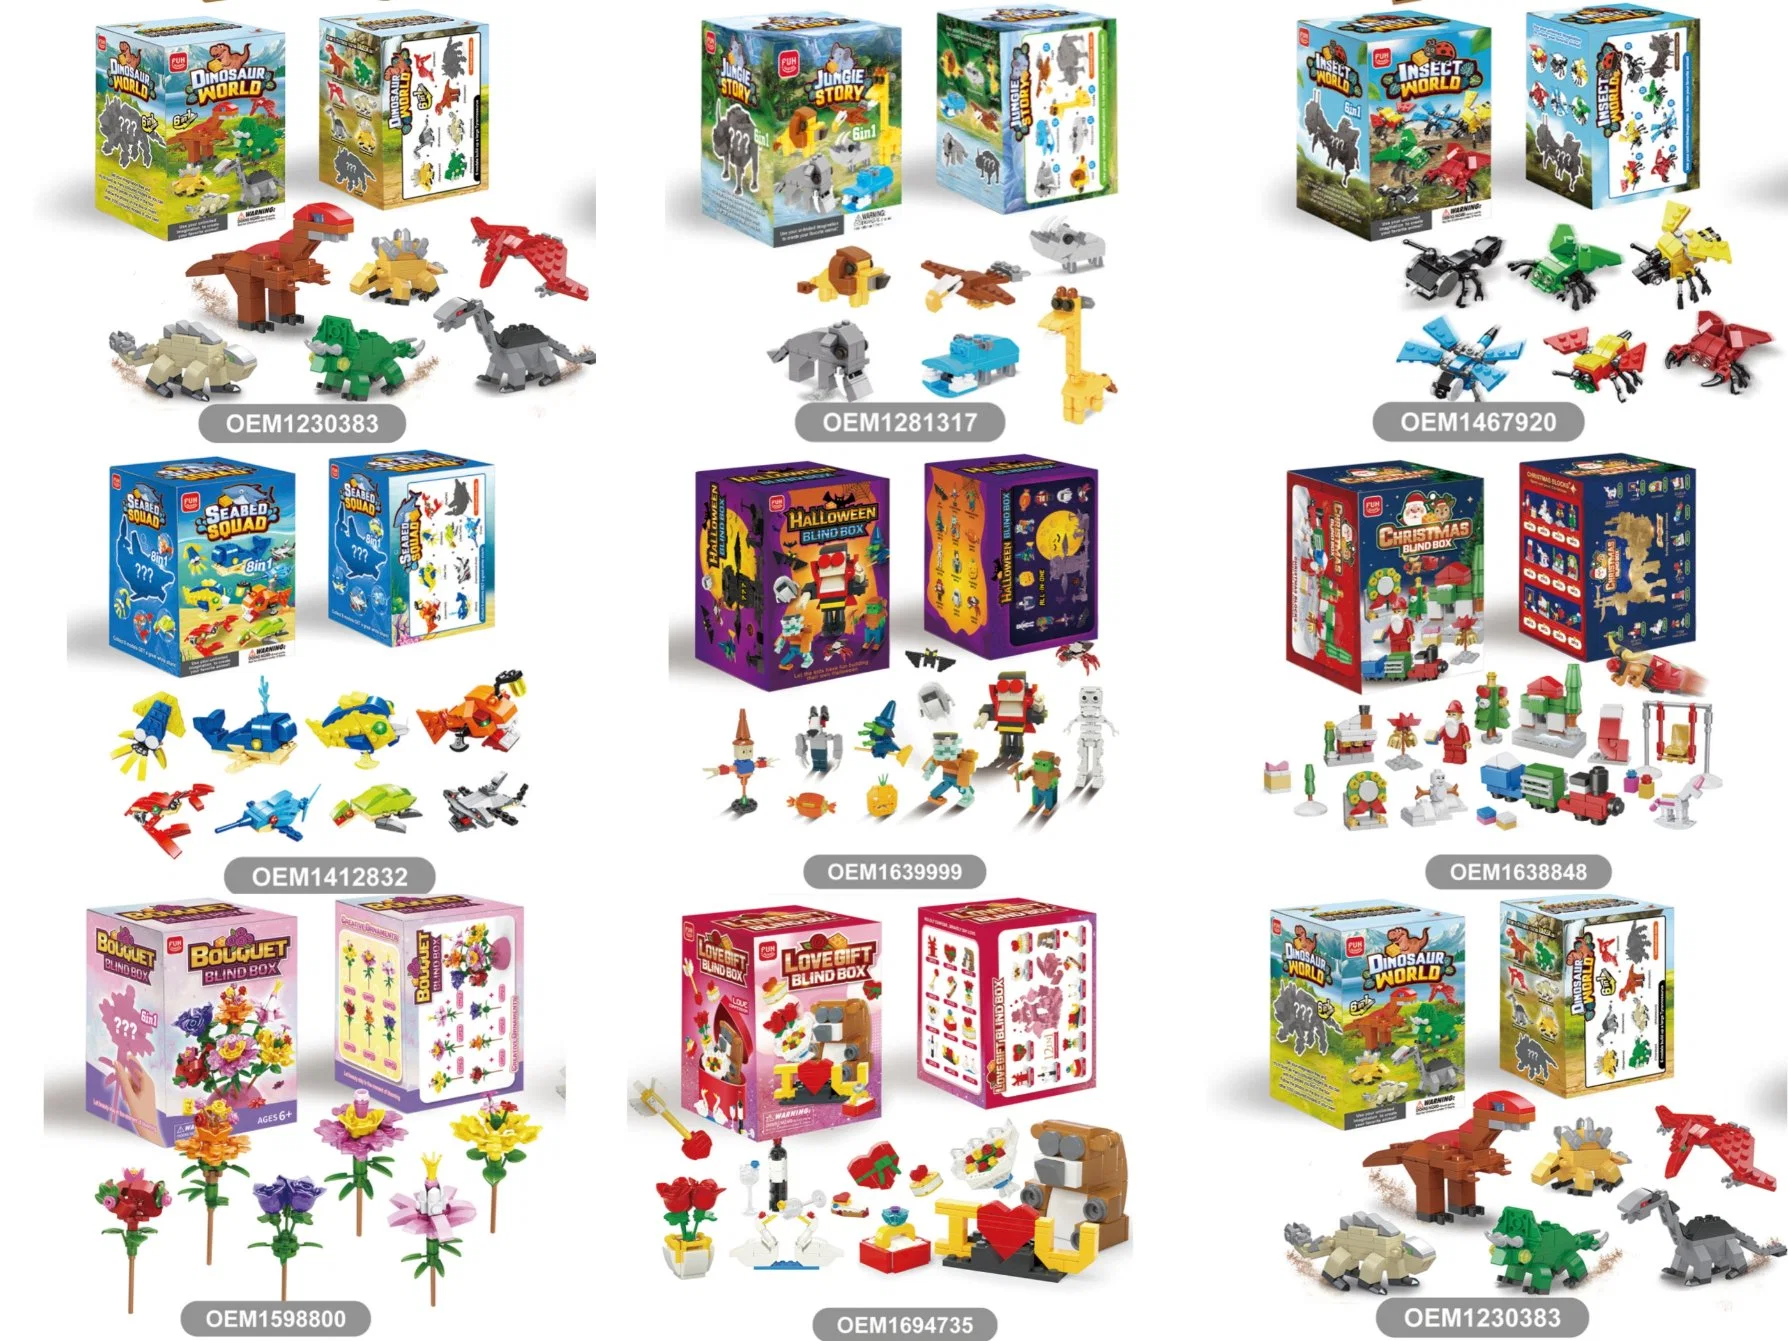 Alle Spielzeuge Hier! Katalog Kinder Spielzeug pädagogische Kinder Kunststoff DIY Kunststoff Großhandel Geschenk Baby RC Auto intellektuelle pädagogische Spielzeug